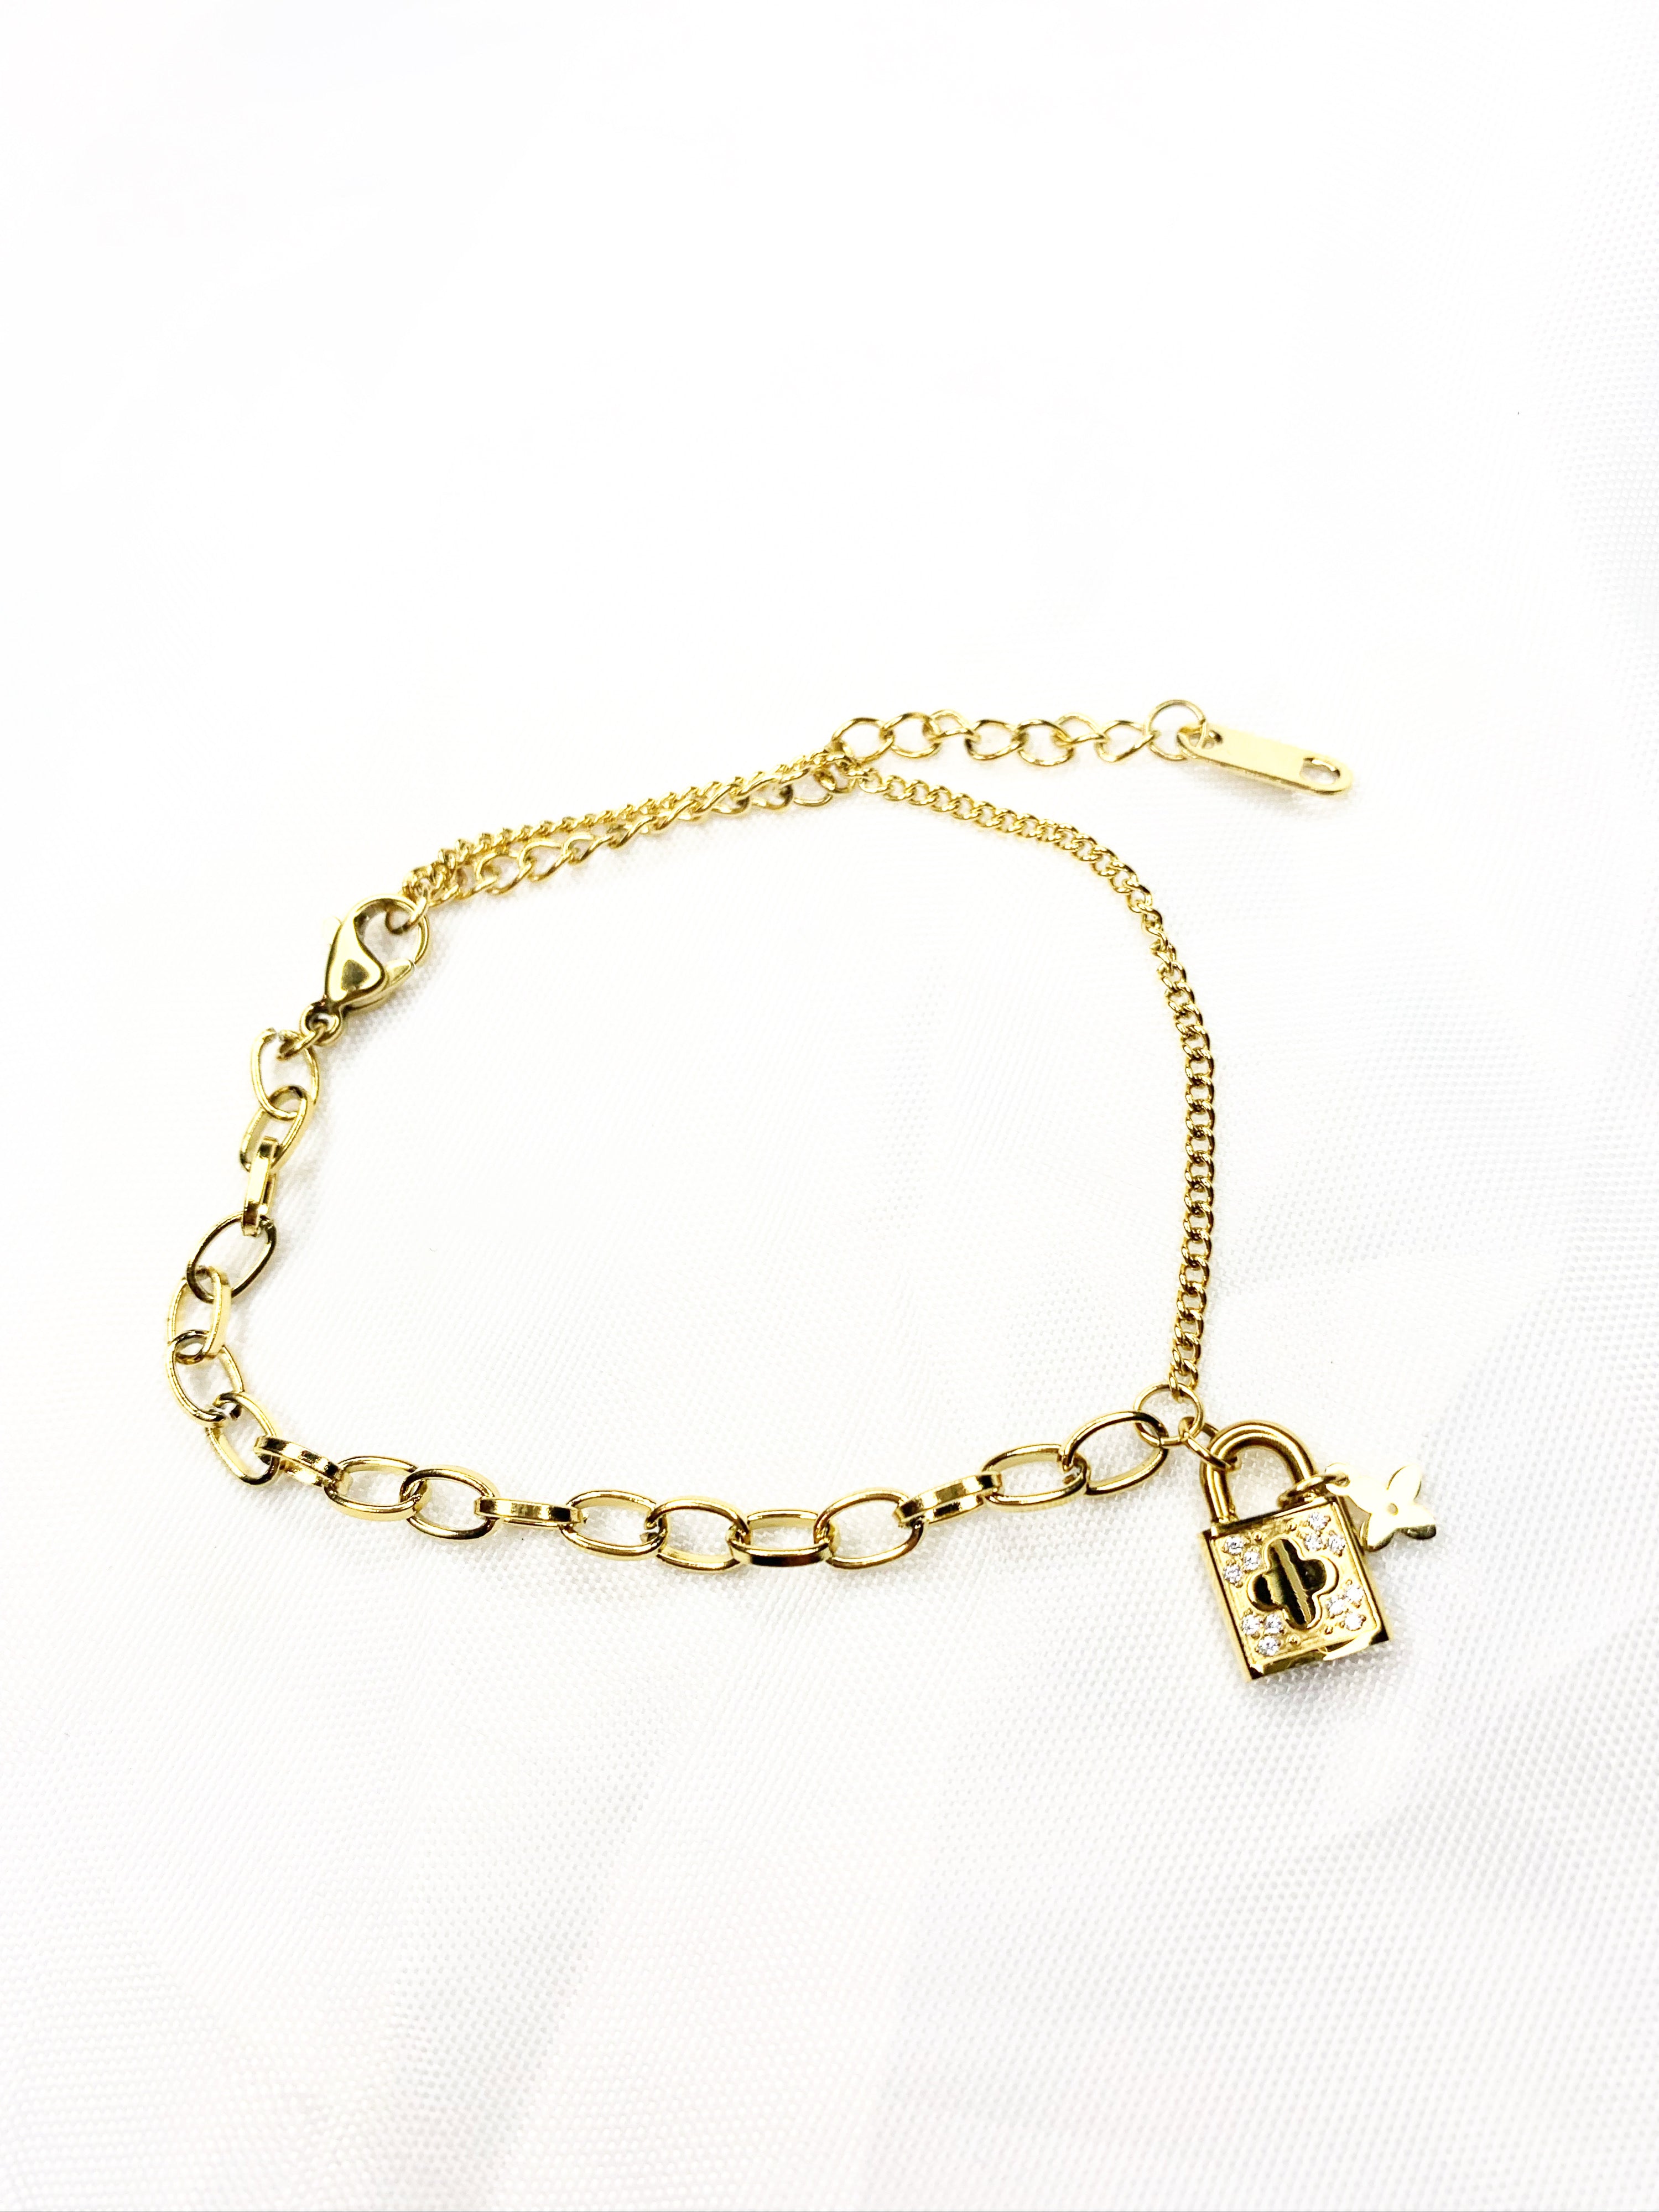 Jude Charm Bracelet Gold Filled / with Link Lock / 6